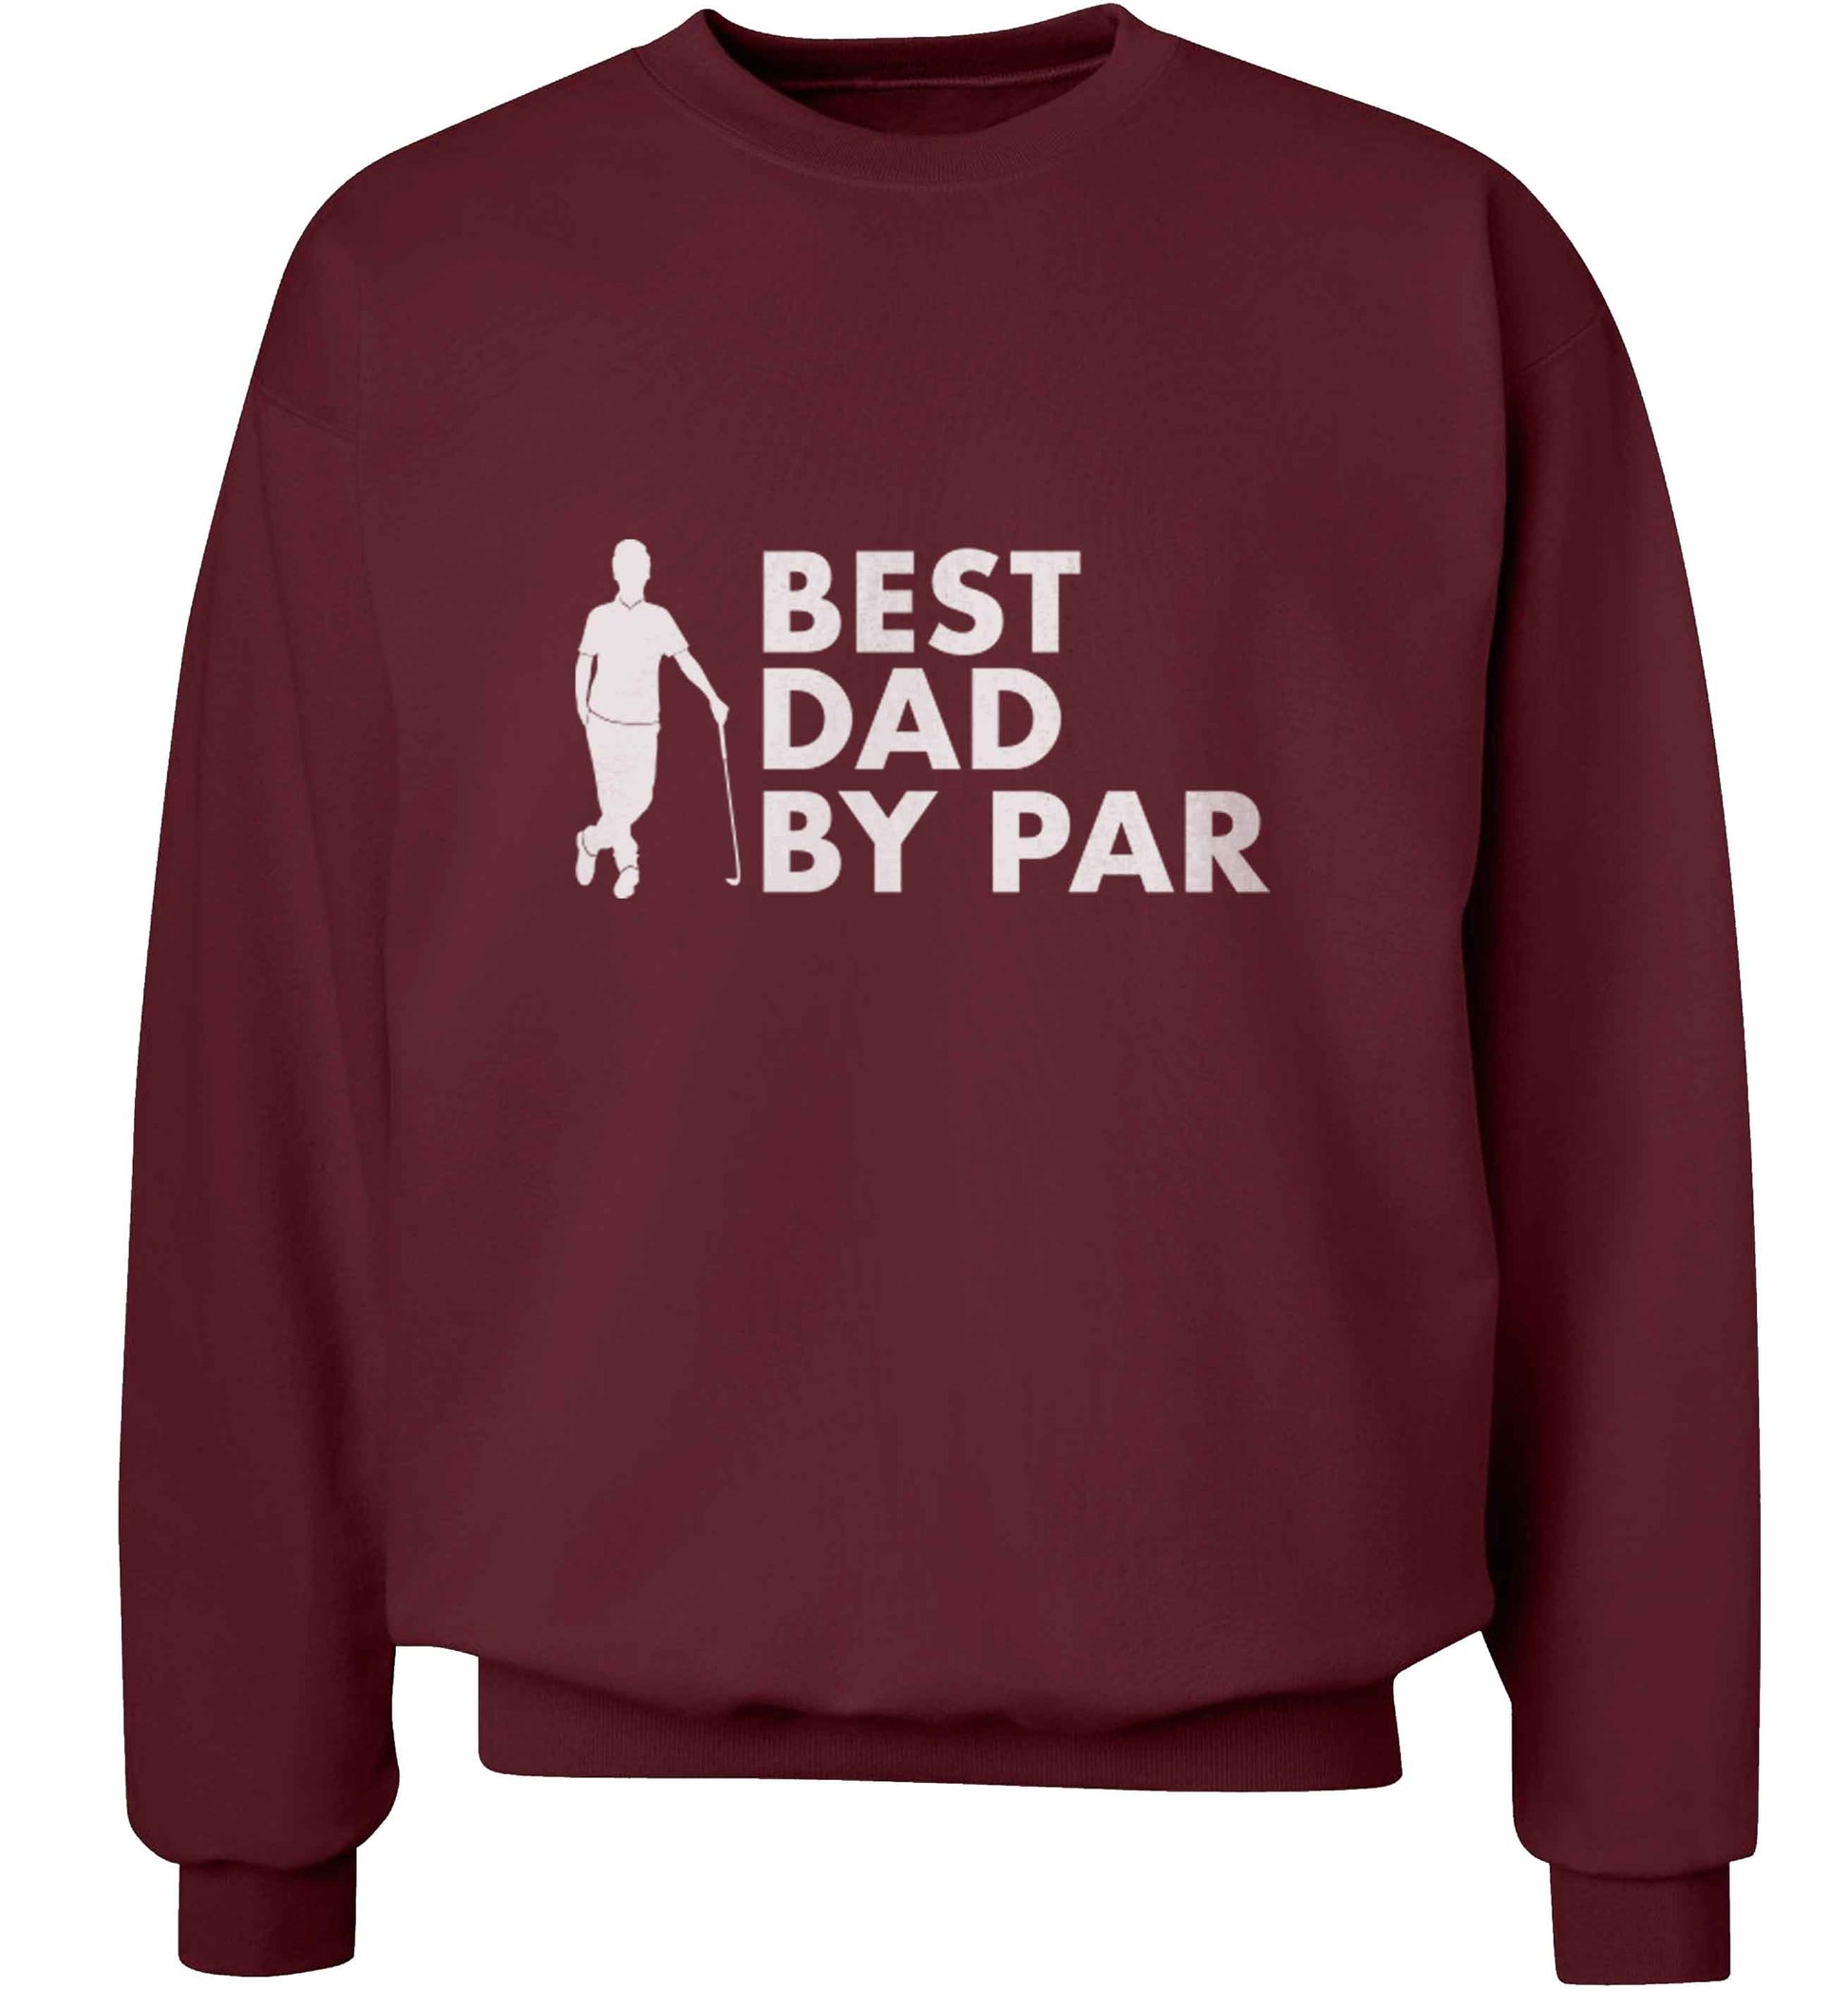 Best dad by par adult's unisex maroon sweater 2XL